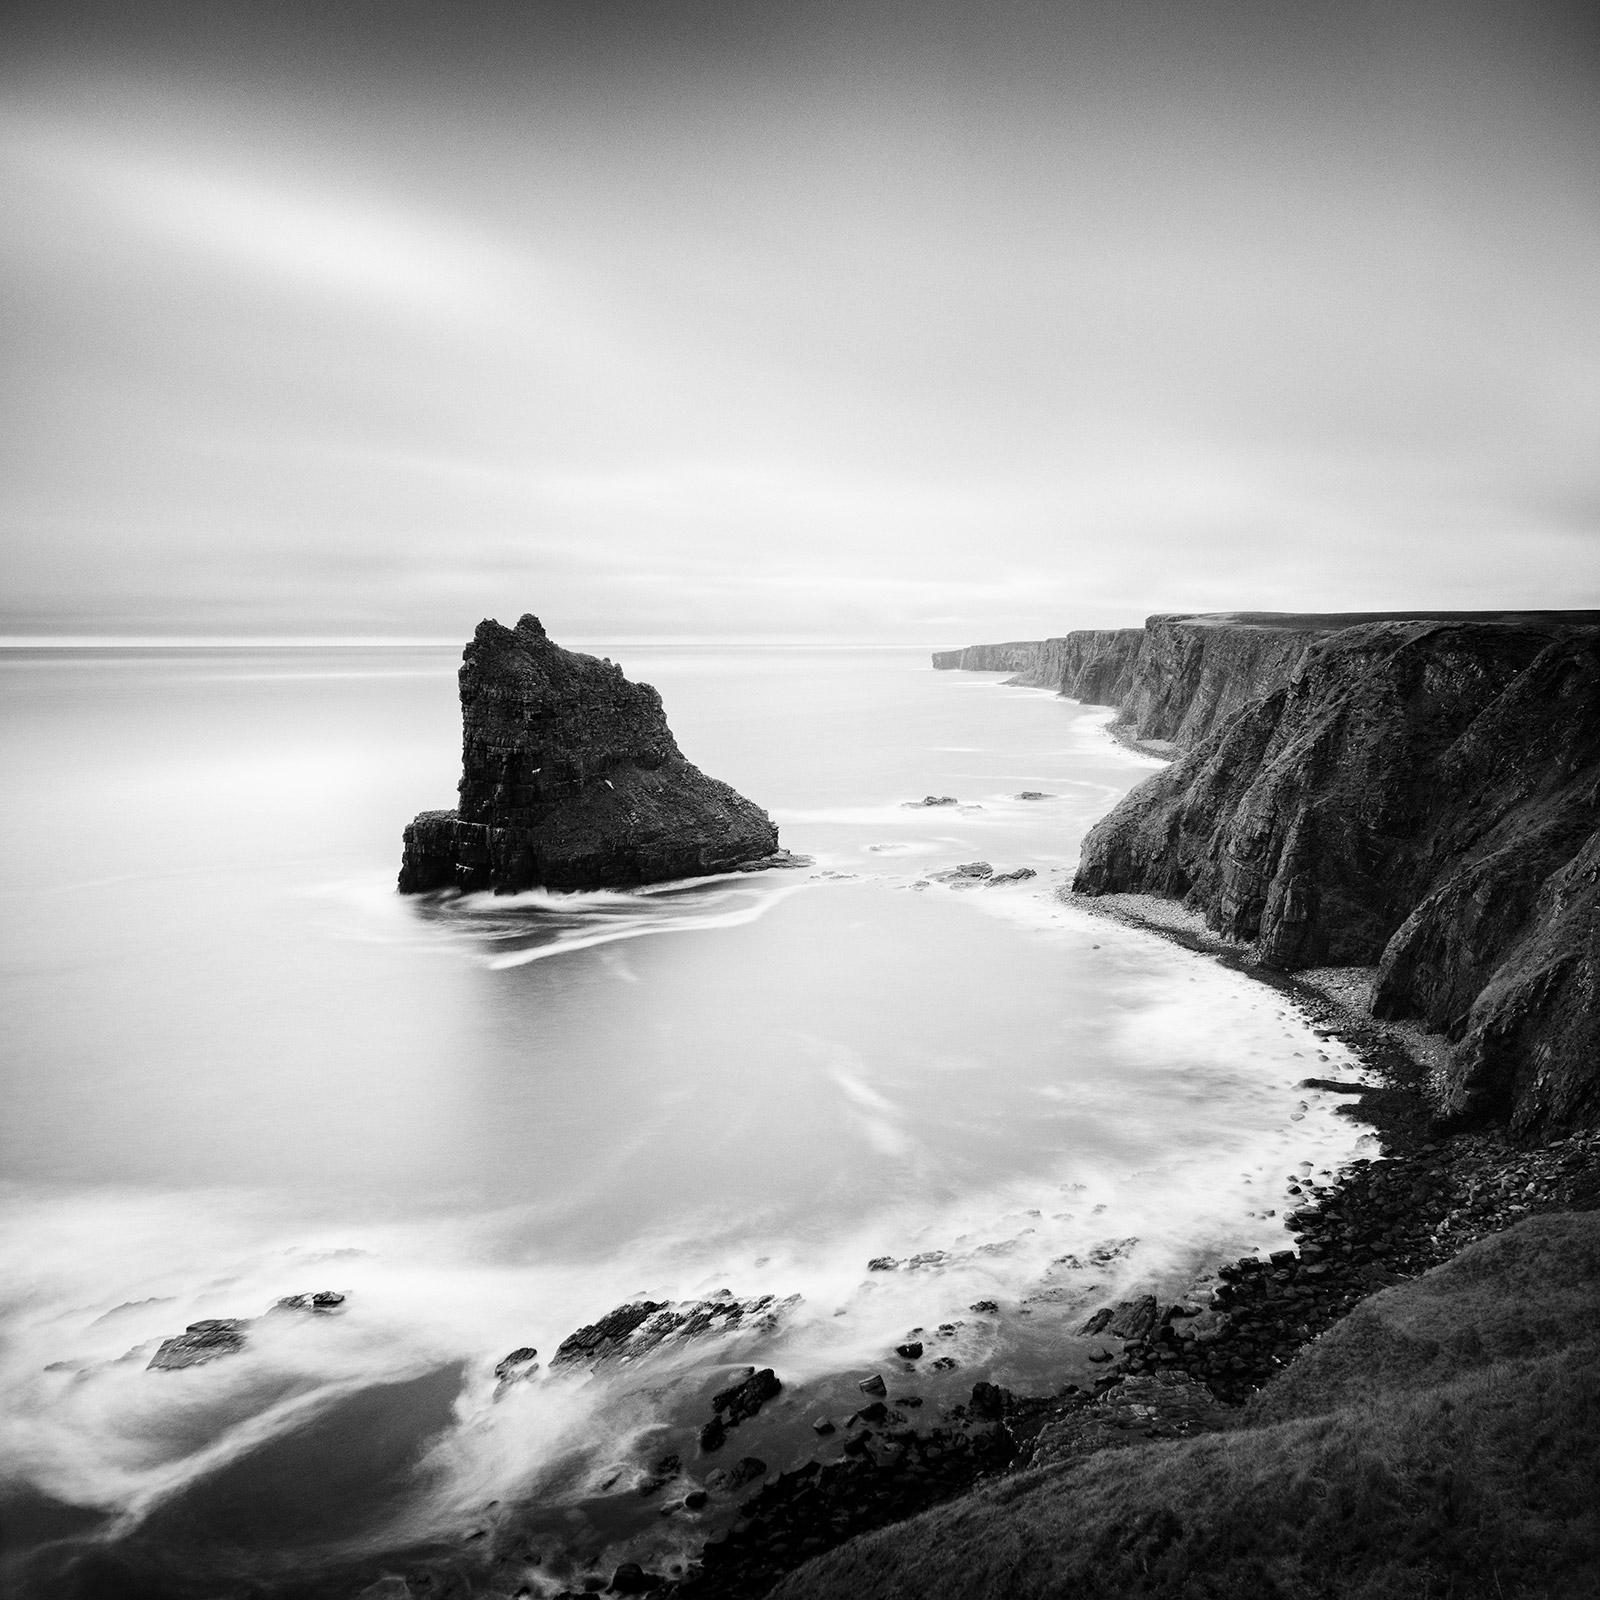 Surreal Moment, scottish coastline cliff, black and white photography, landscape